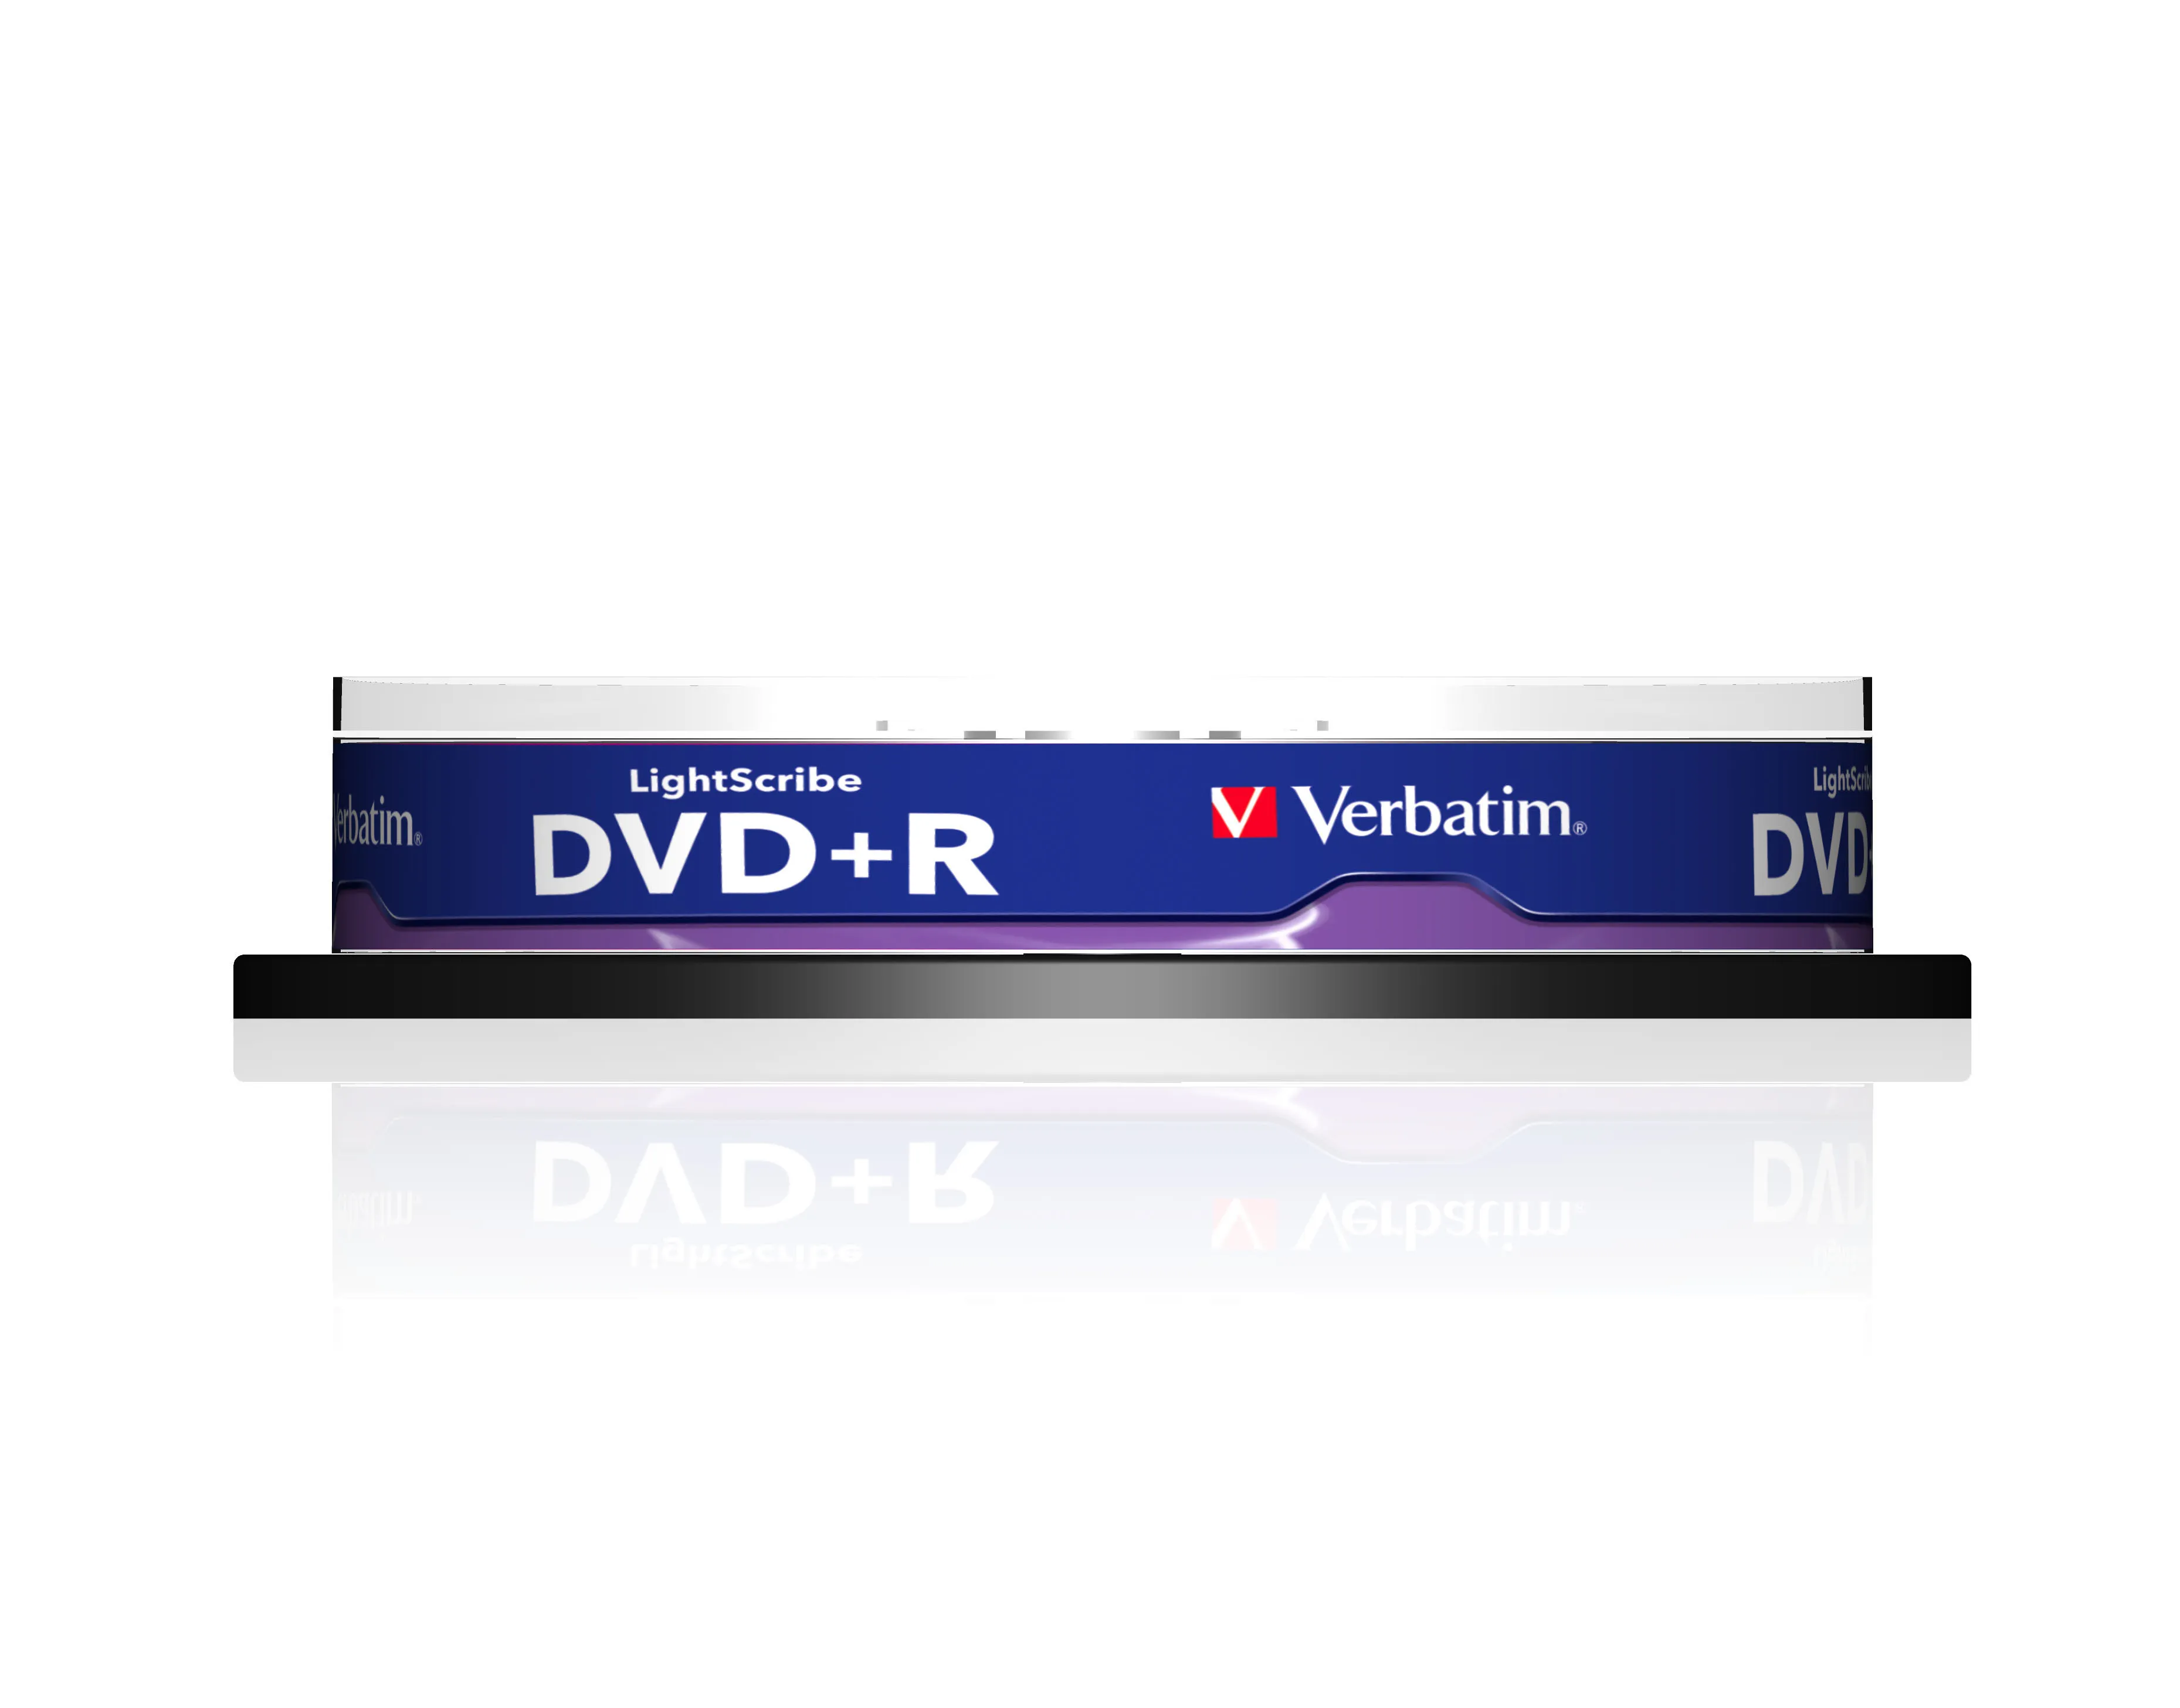 Vente Verbatim DVD+R LightScribe V1.2 Verbatim au meilleur prix - visuel 2